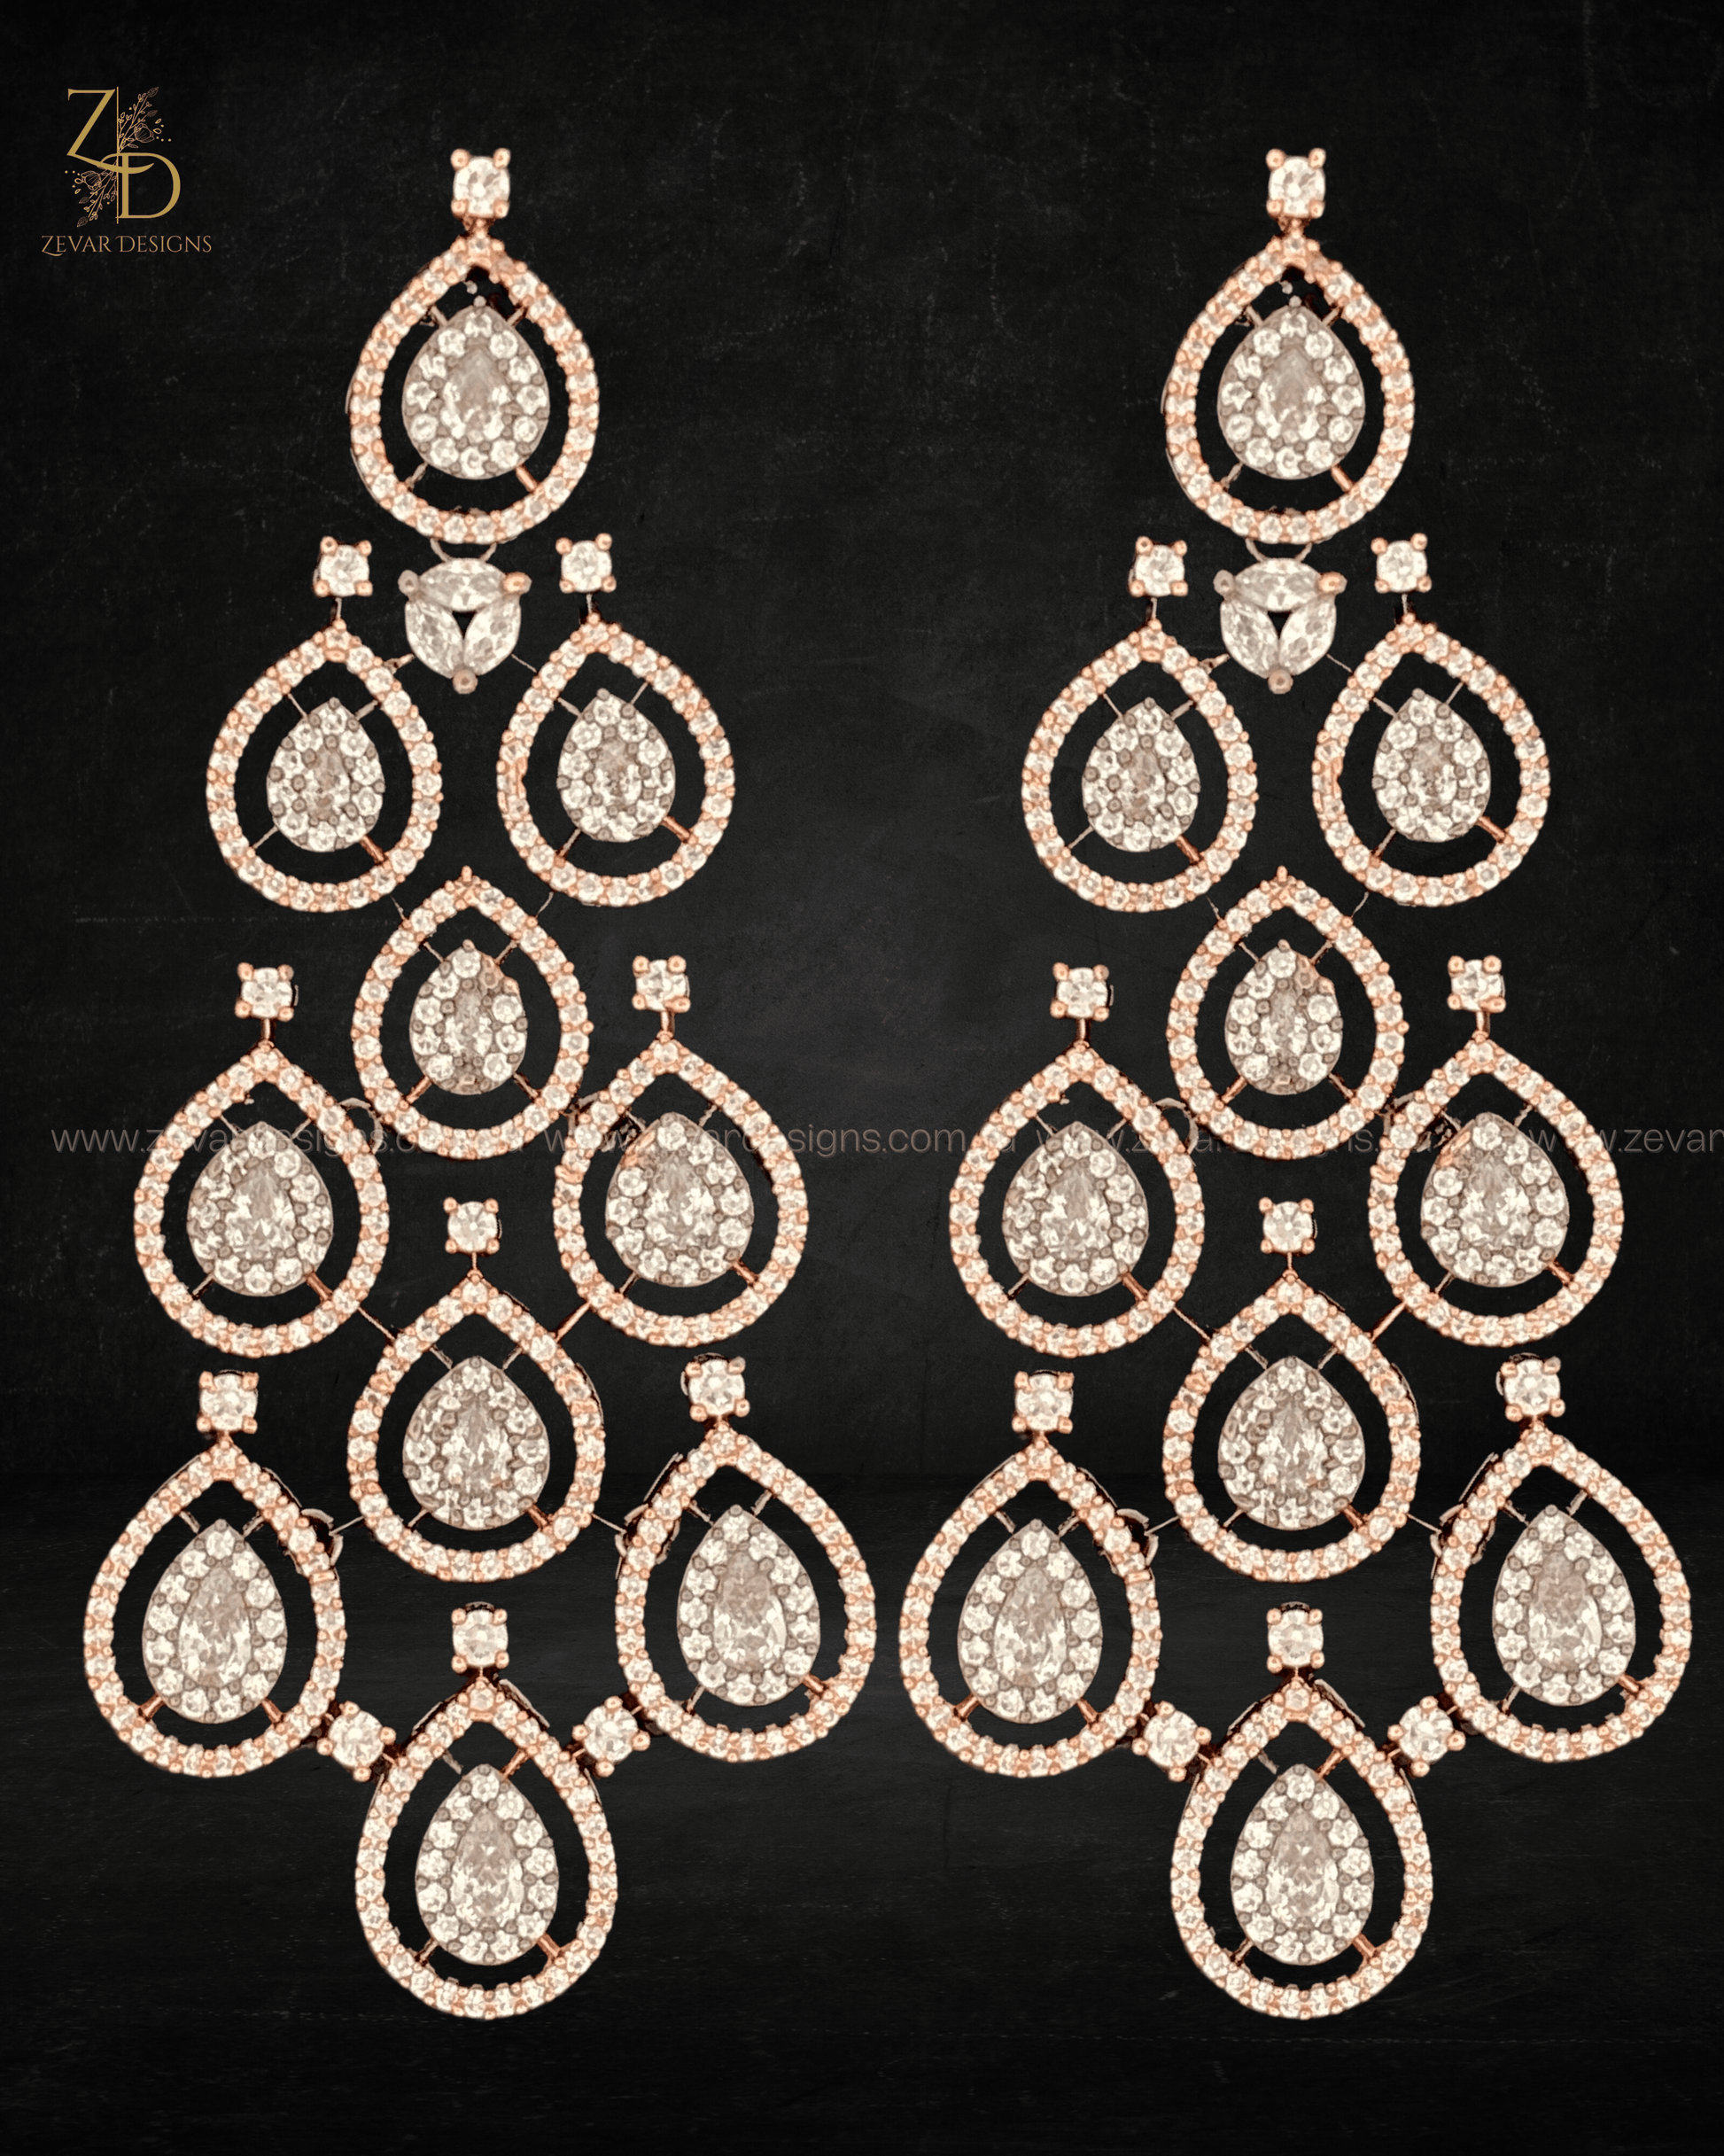 Zevar Designs Indo-Western Earrings Rose Gold/Black Finish AD Earrings